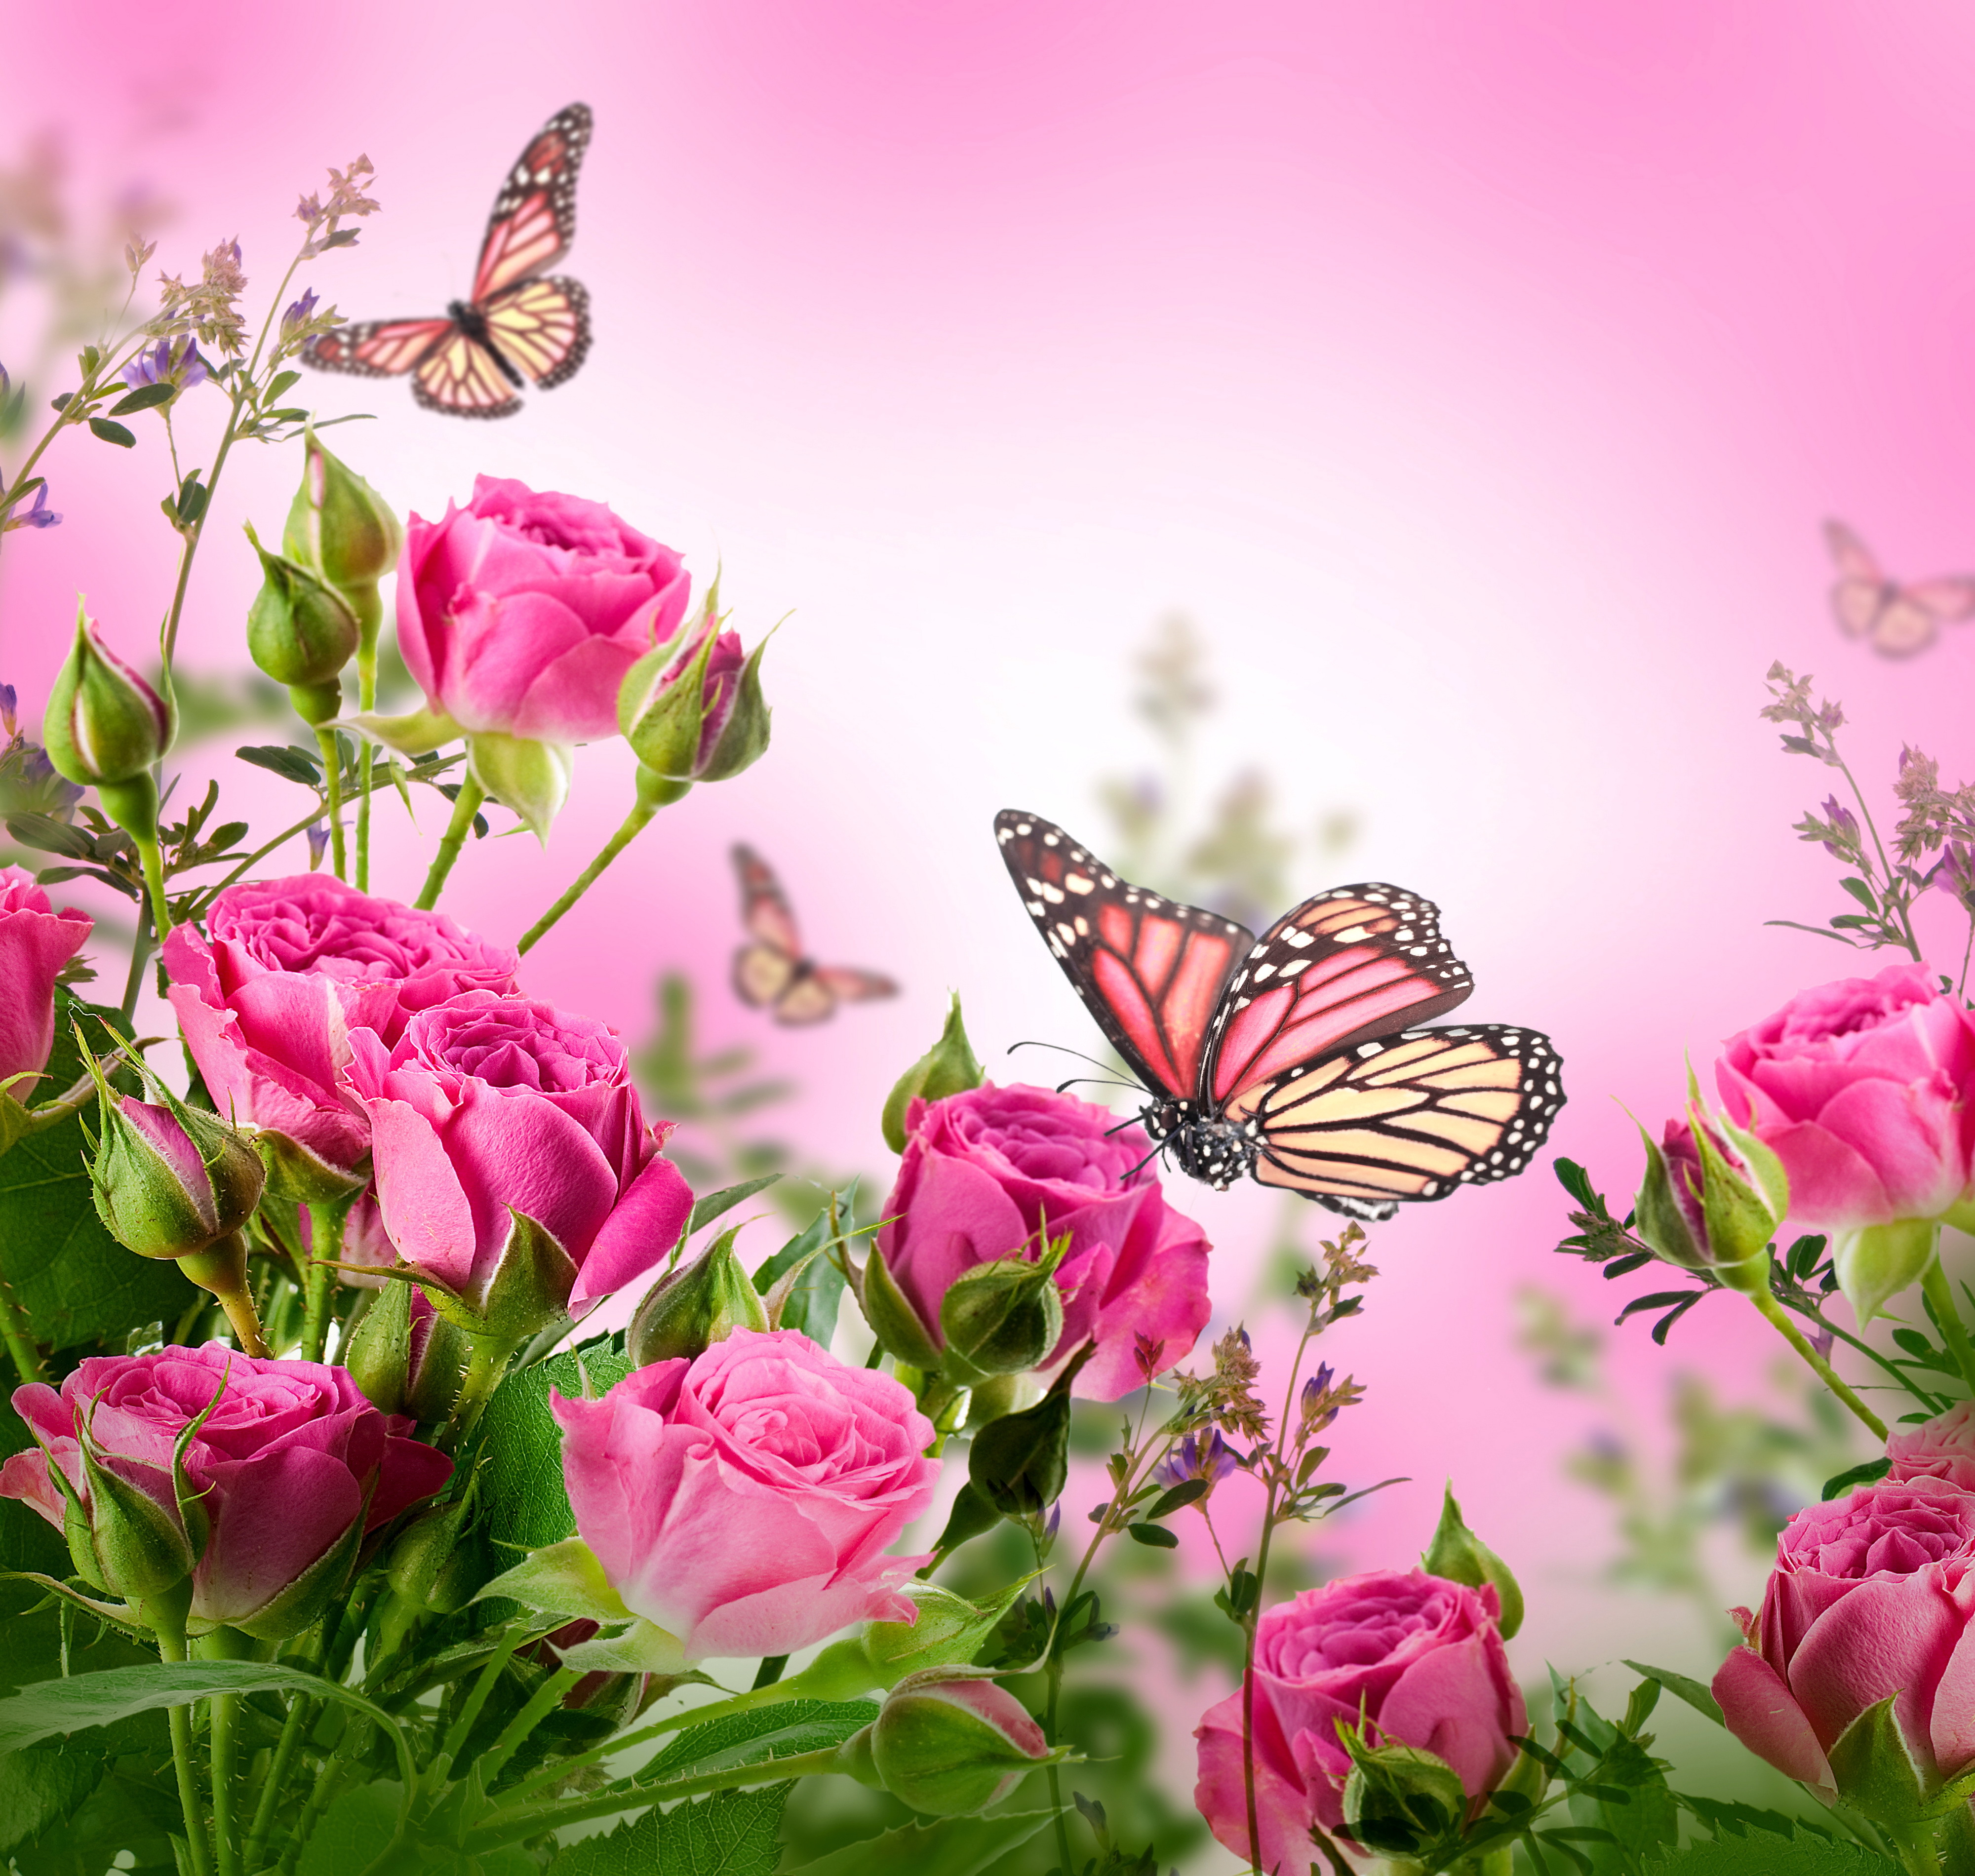  butterflies blossom beautiful flowers roses wallpapers flowers